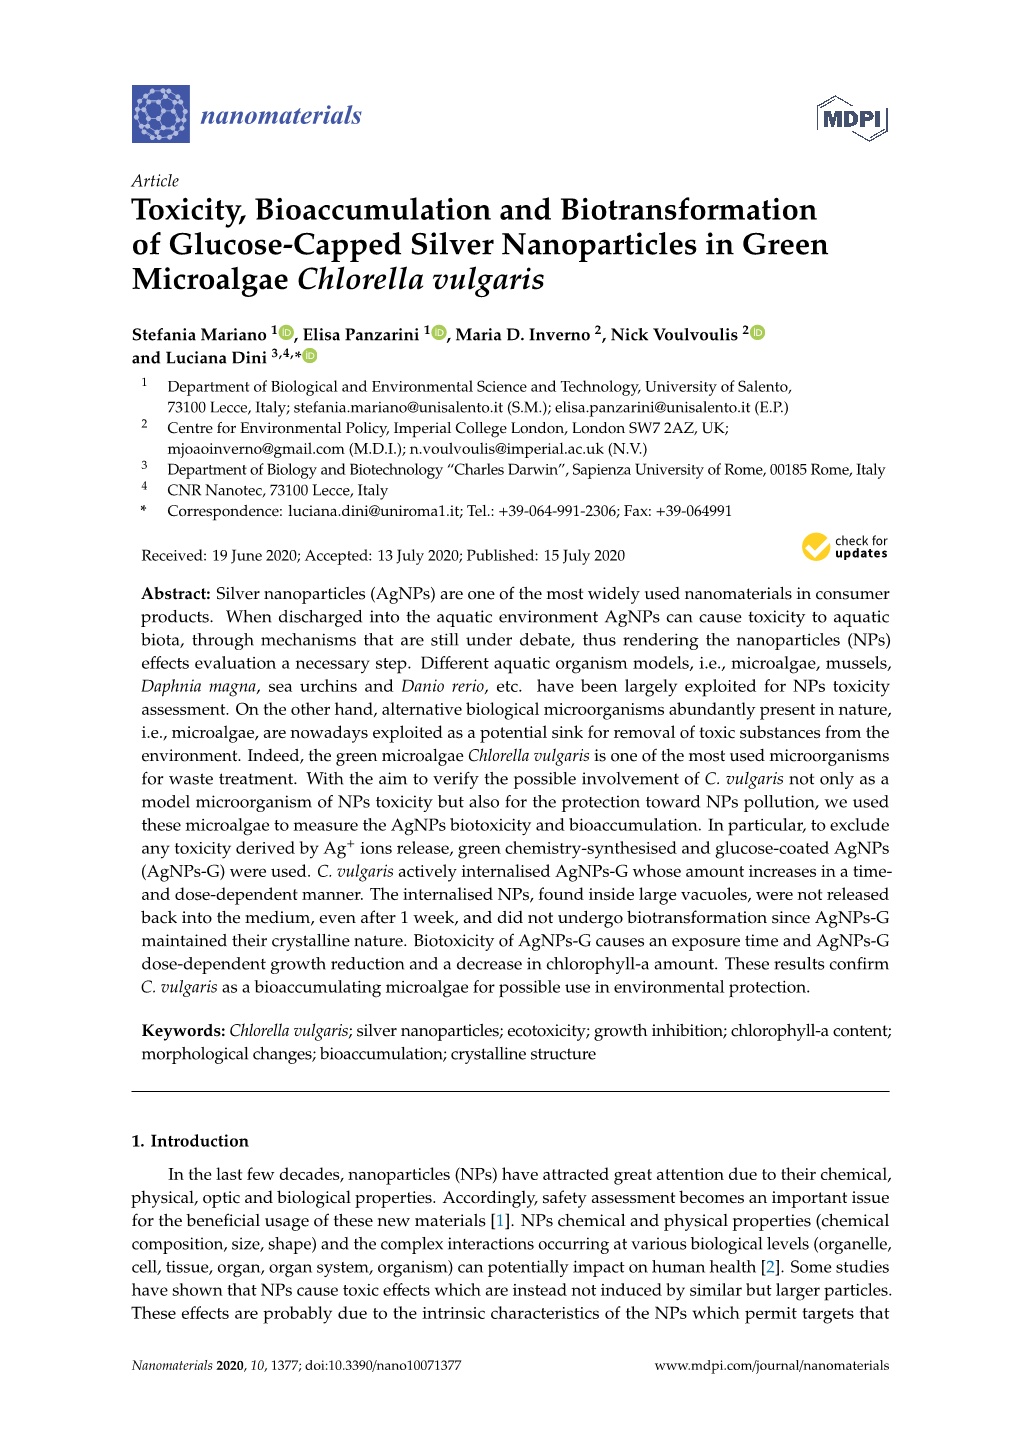 Toxicity, Bioaccumulation and Biotransformation of Glucose-Capped Silver Nanoparticles in Green Microalgae Chlorella Vulgaris